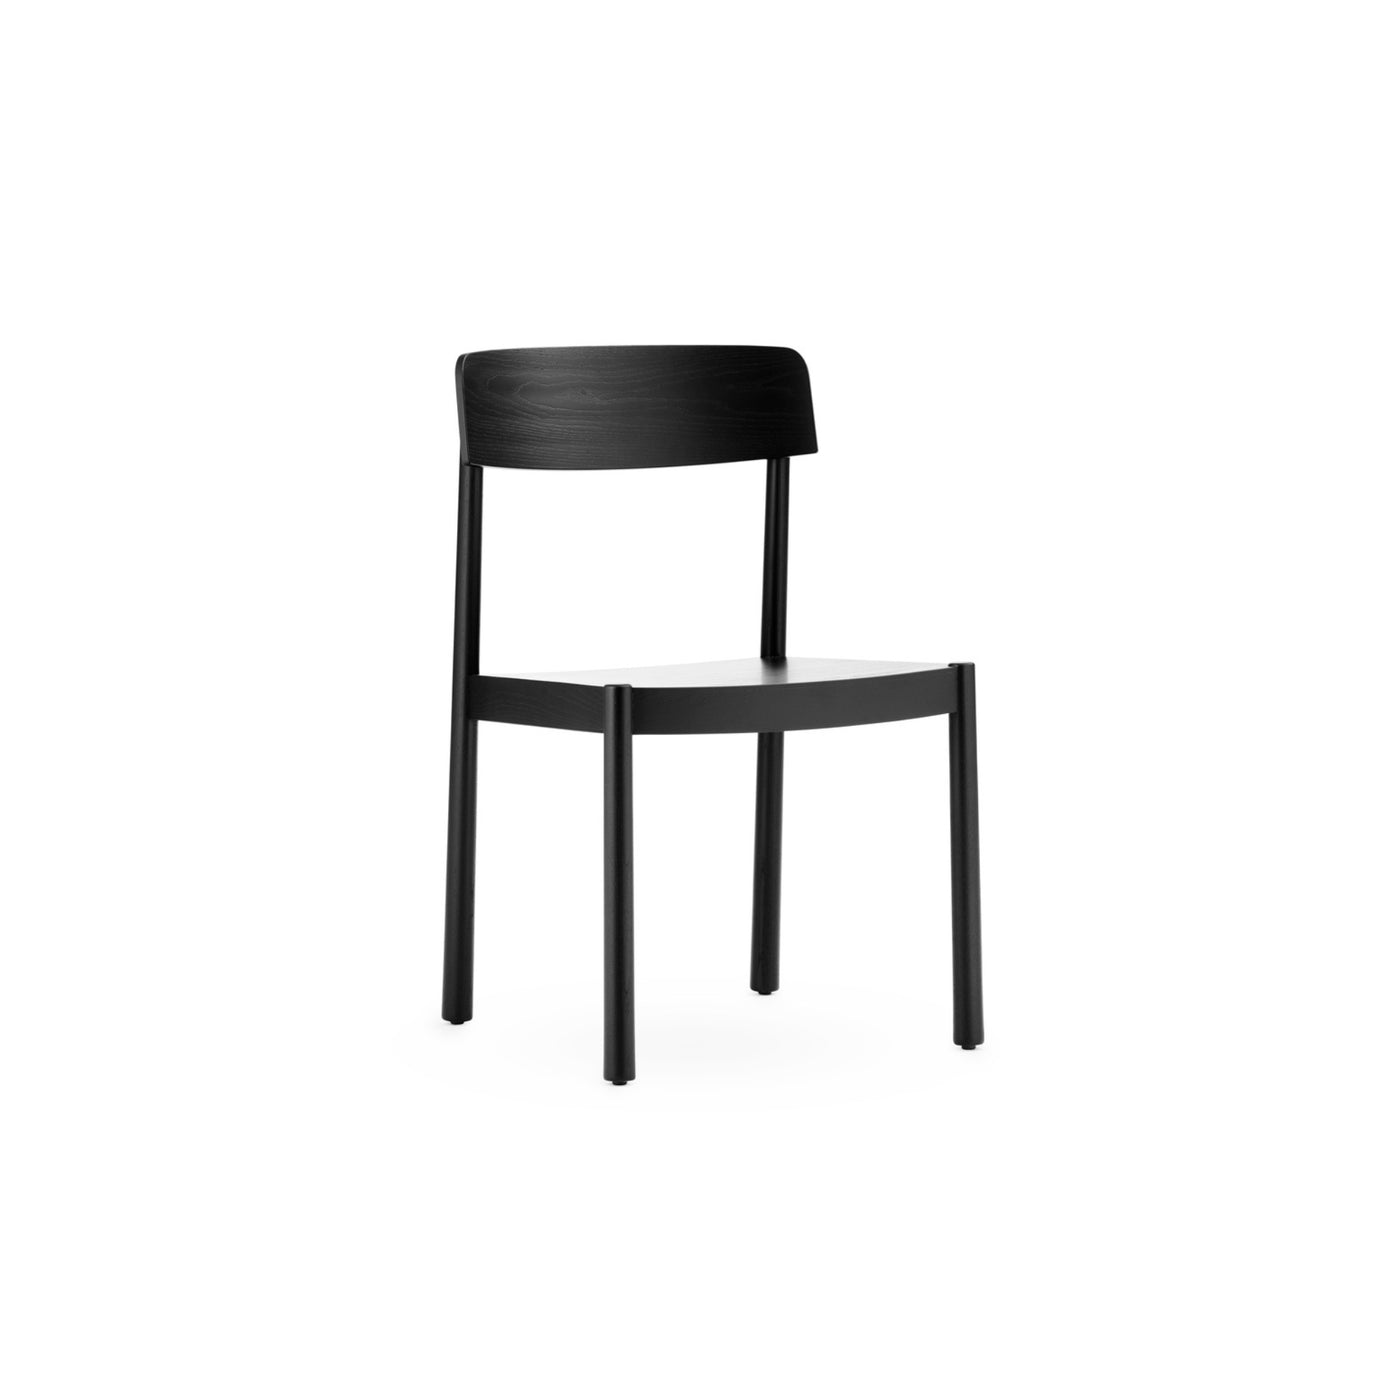 Normann Copenhagen Timb Chair at someday designs. #colour_black